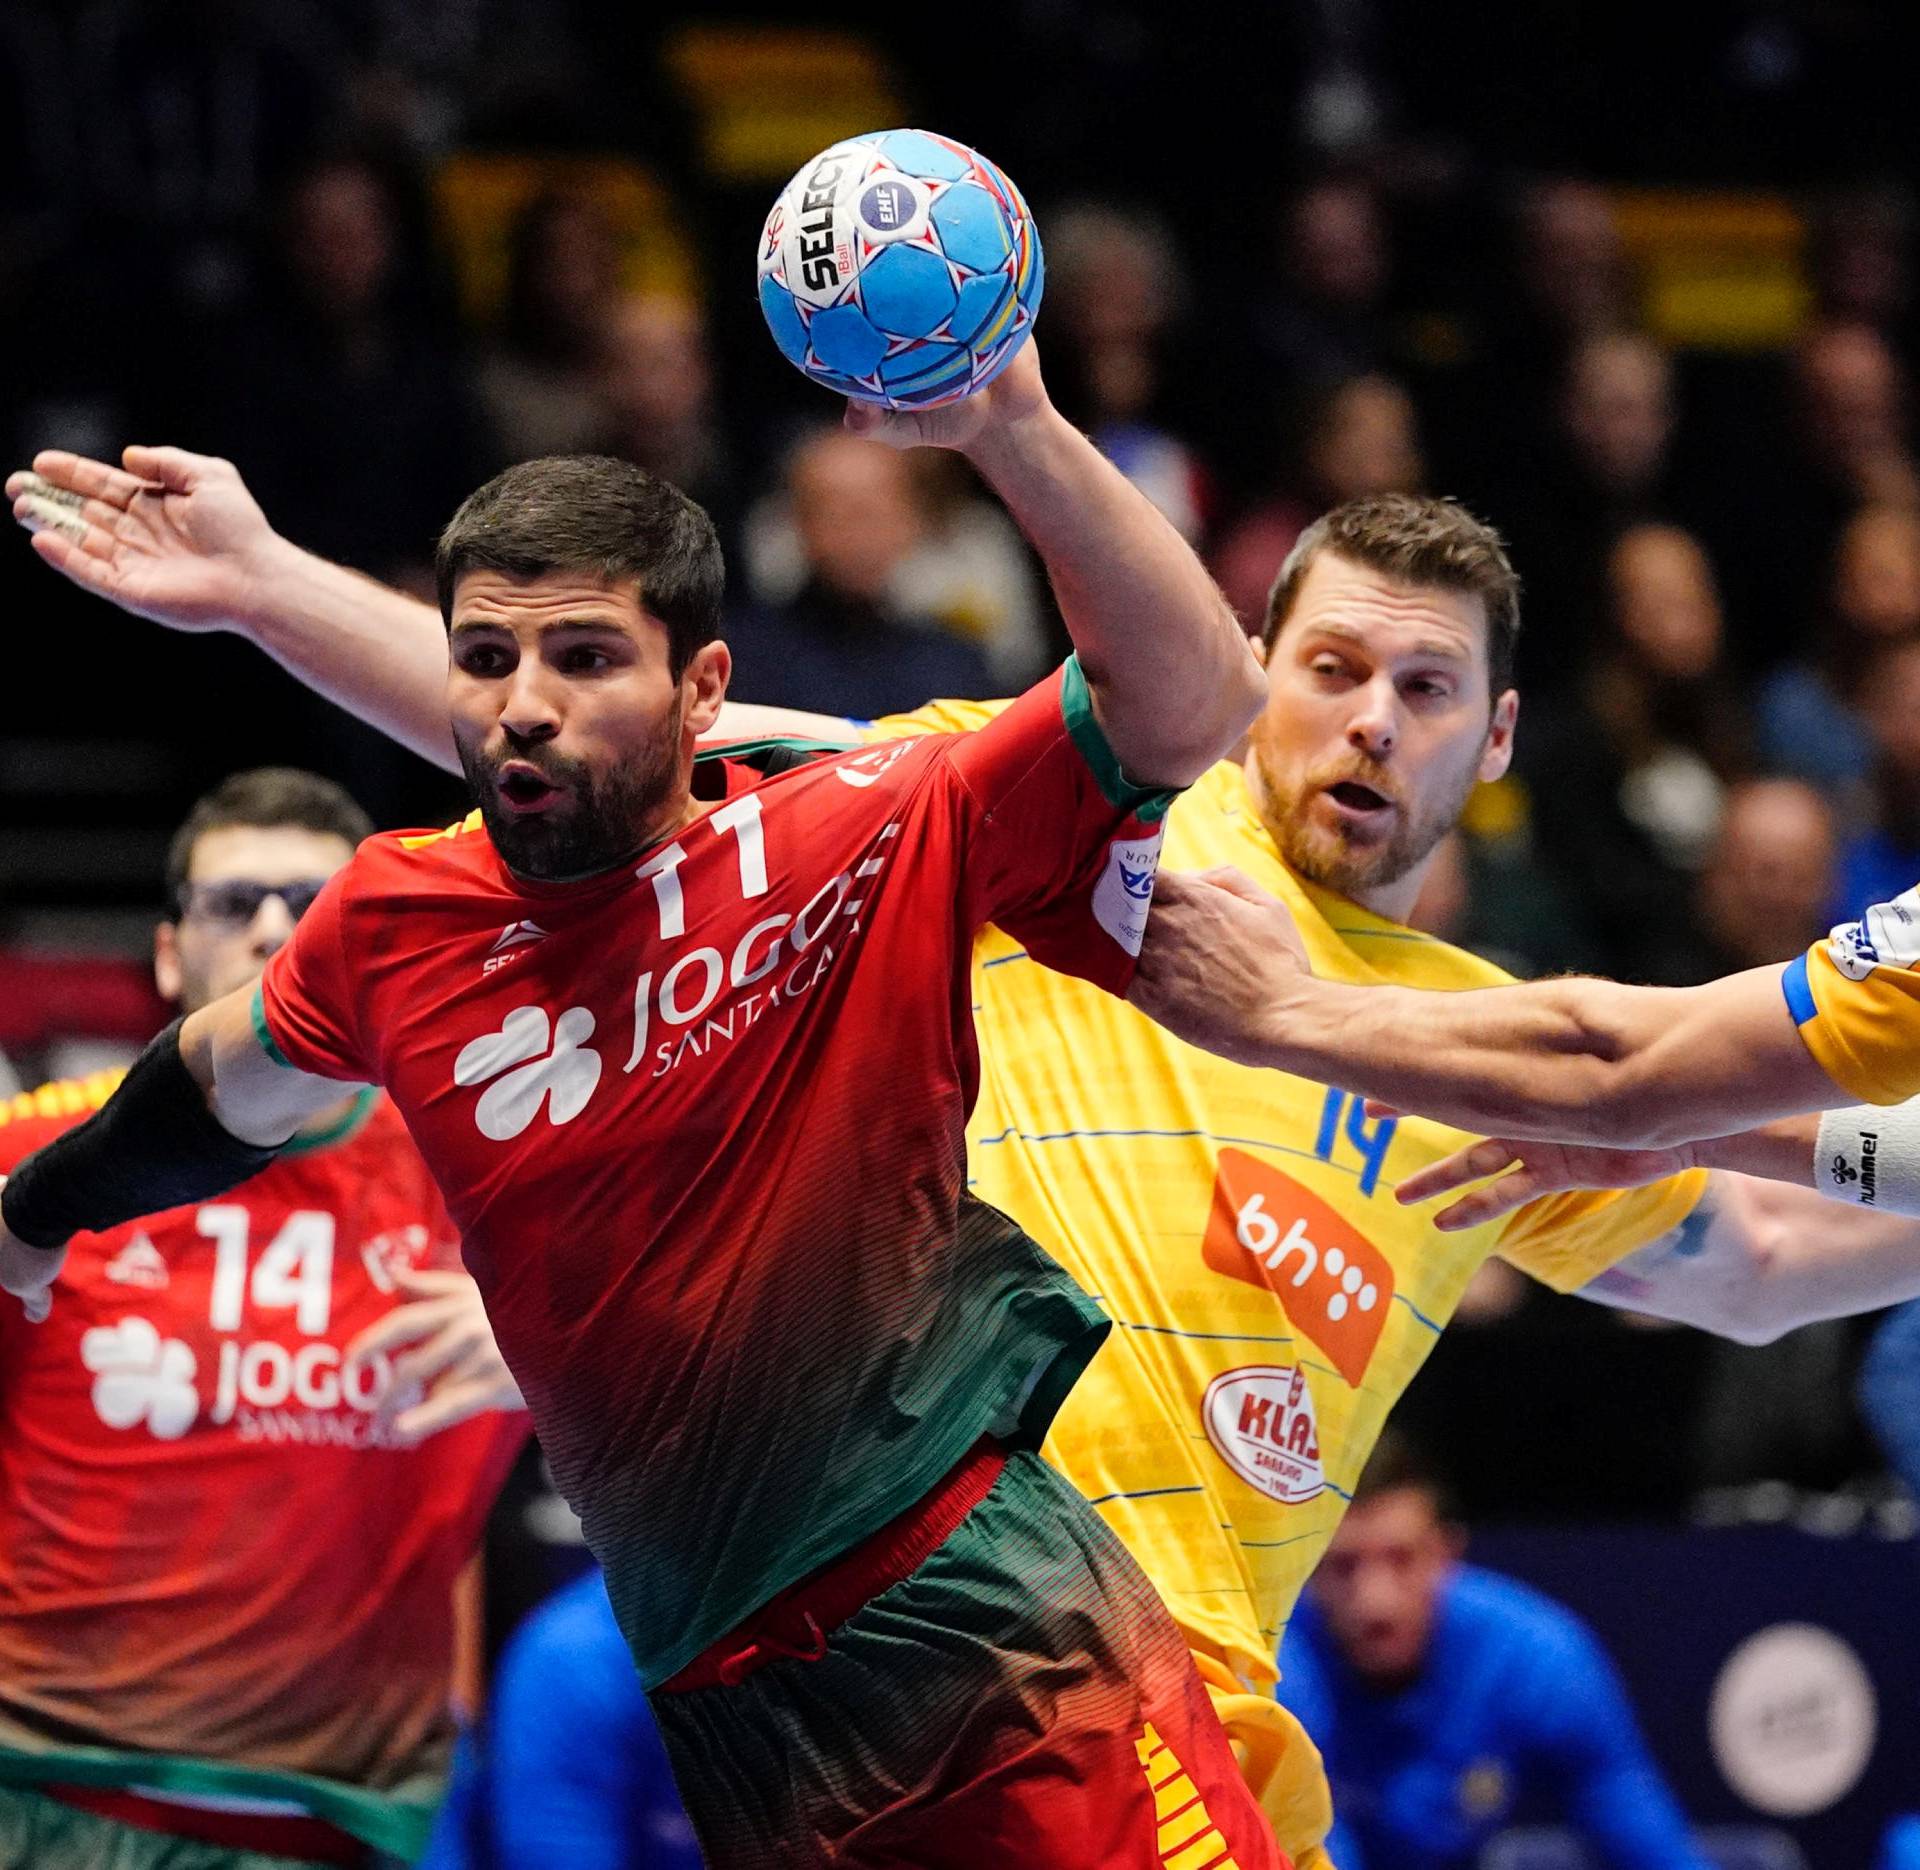 2020 EHF European Men's Handball Championship - Portugal v Bosnia and Herzegovina